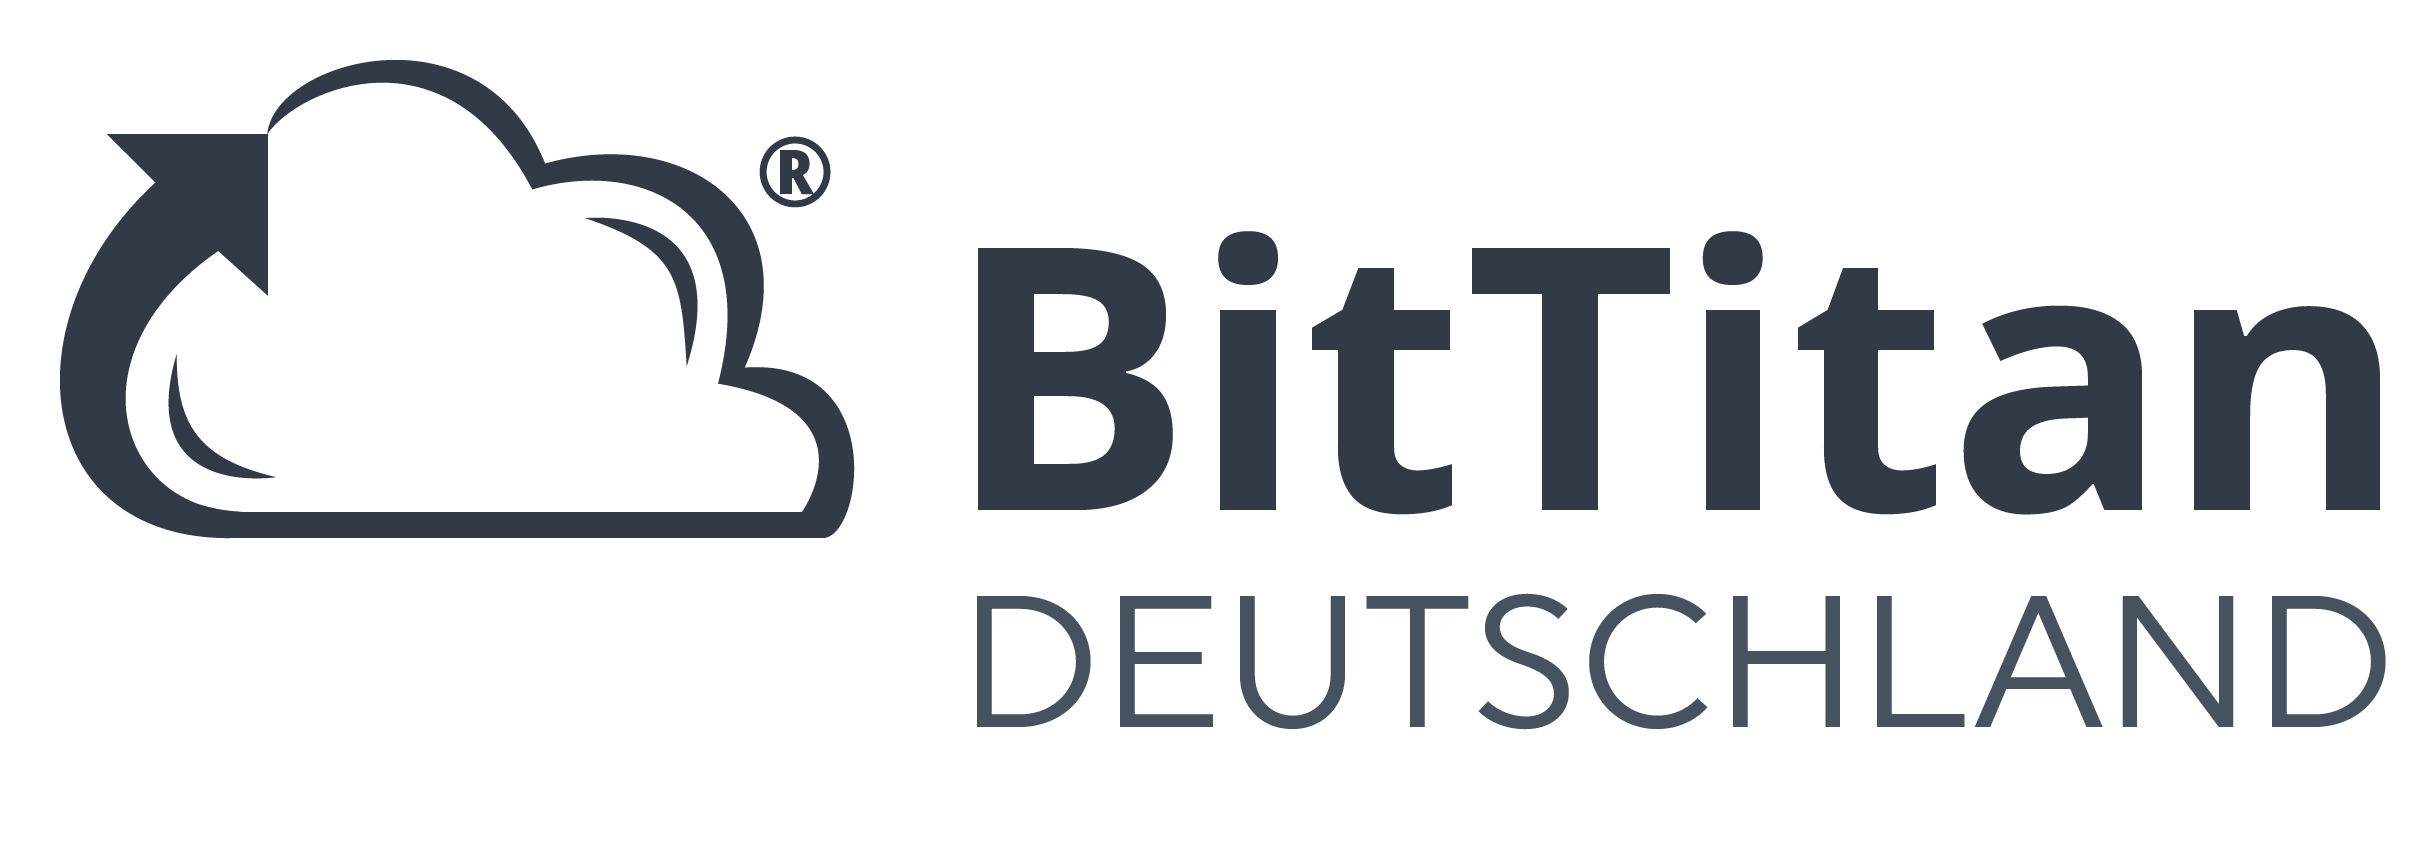 BitTitan Logo - Terms of Use - BitTitan